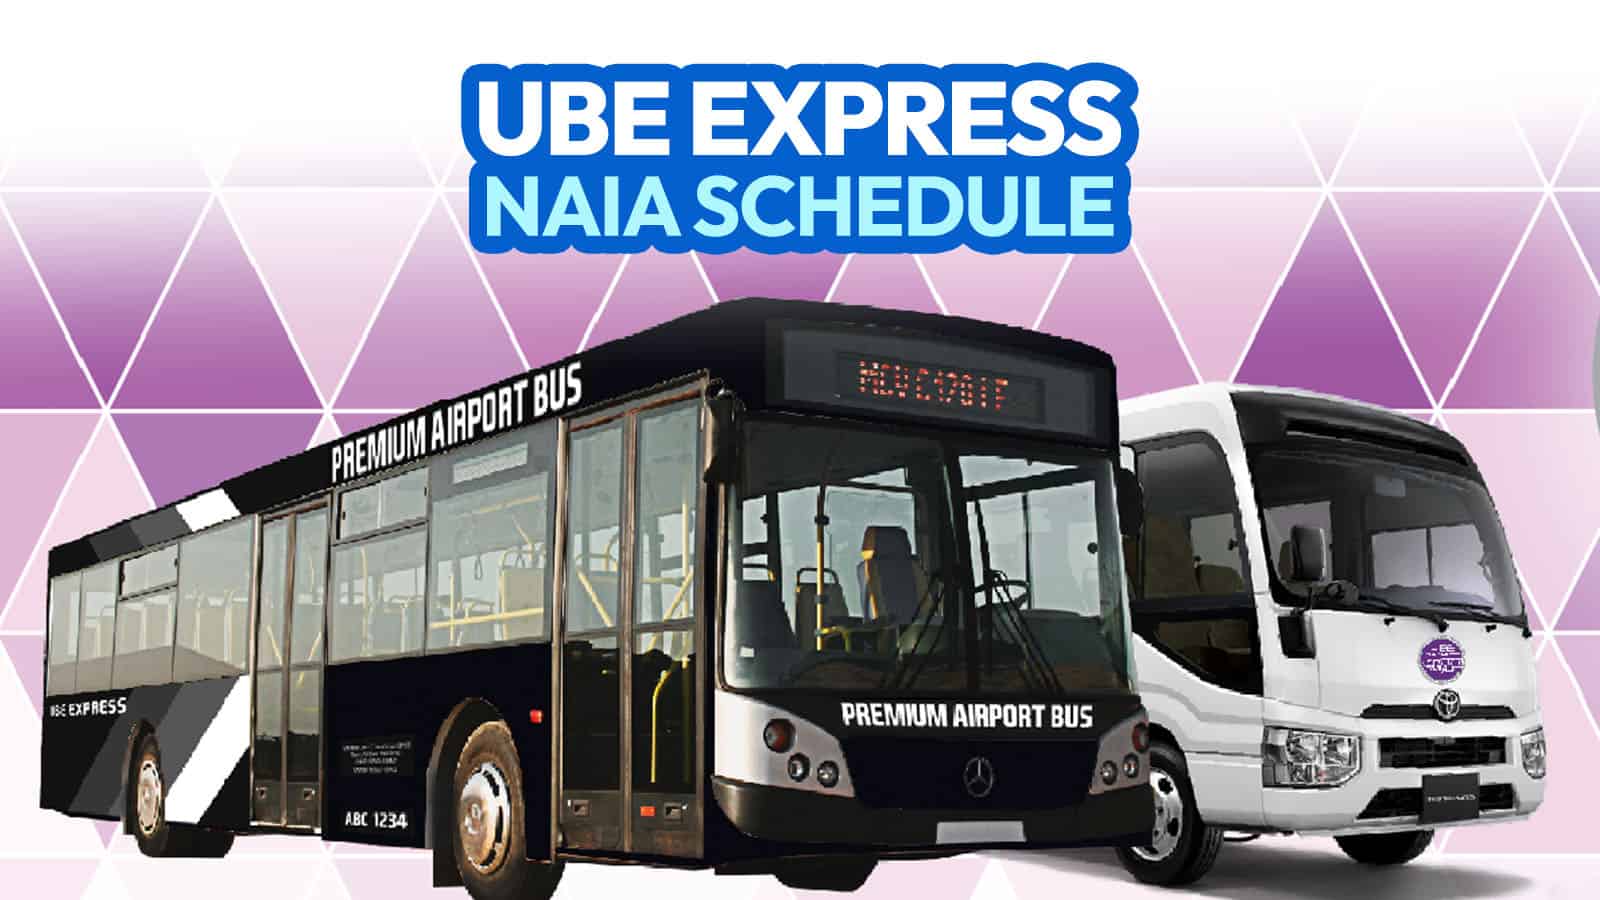 UBE EXPRESS P2P BUS SCHEDULE for NAIA to Cubao, Santa Rosa & Robinsons Manila